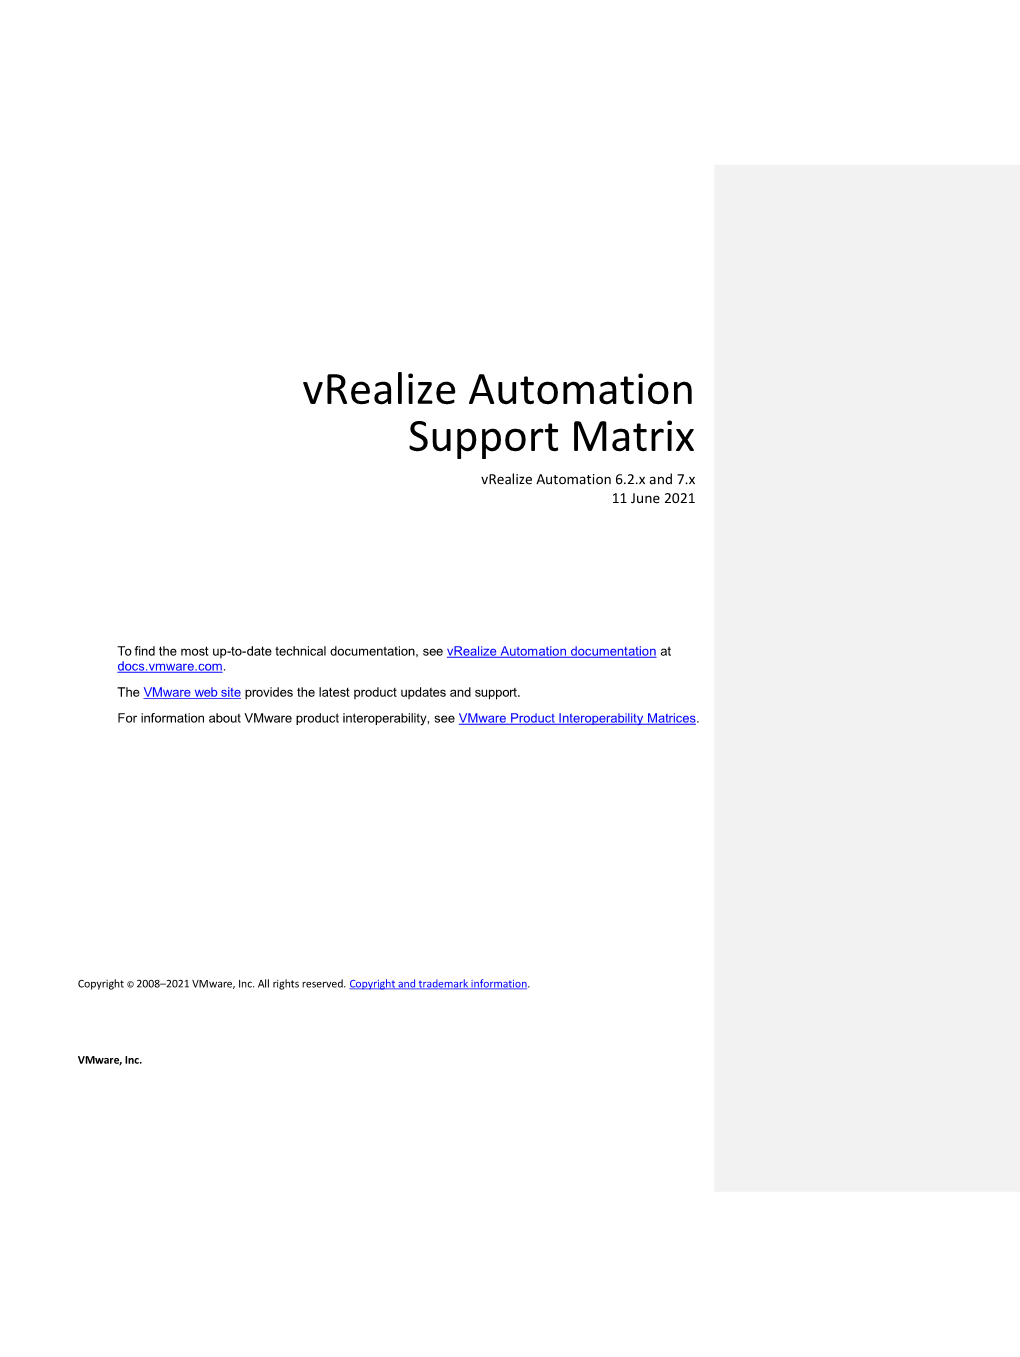 Vrealize Automation Support Matrix